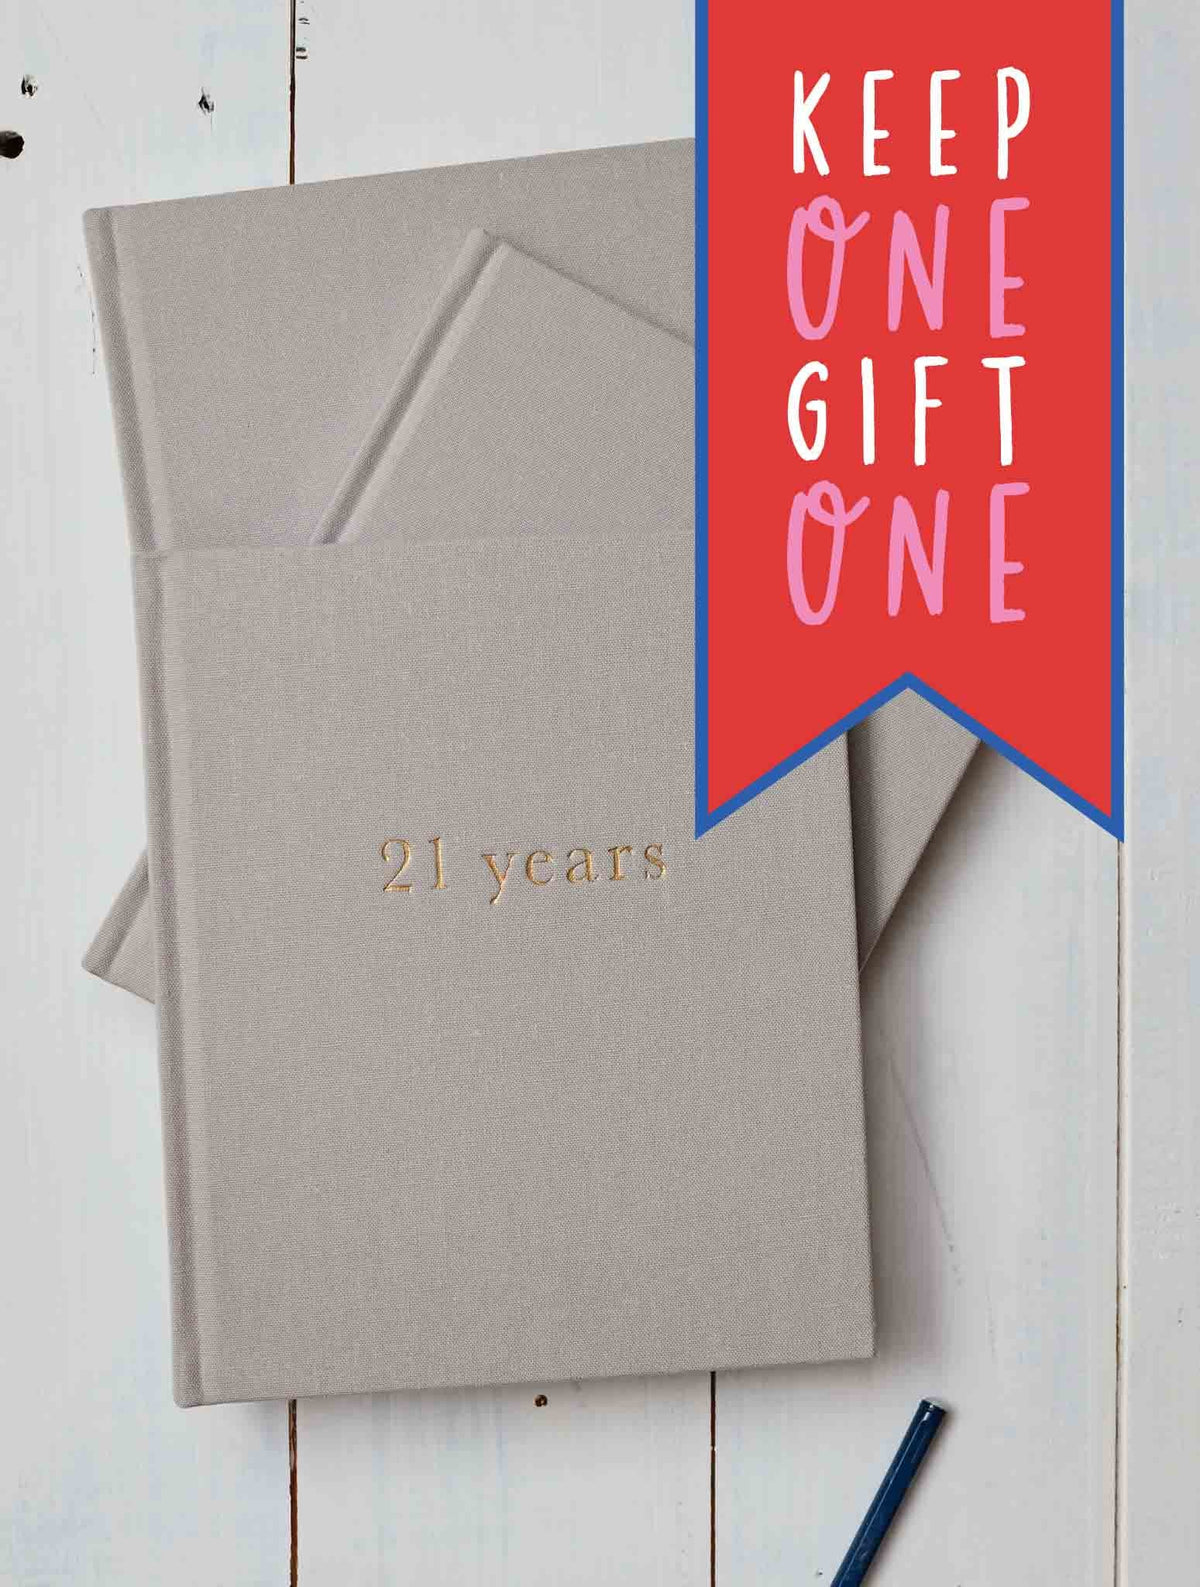 21 Years. Keep One Gift One Bundle